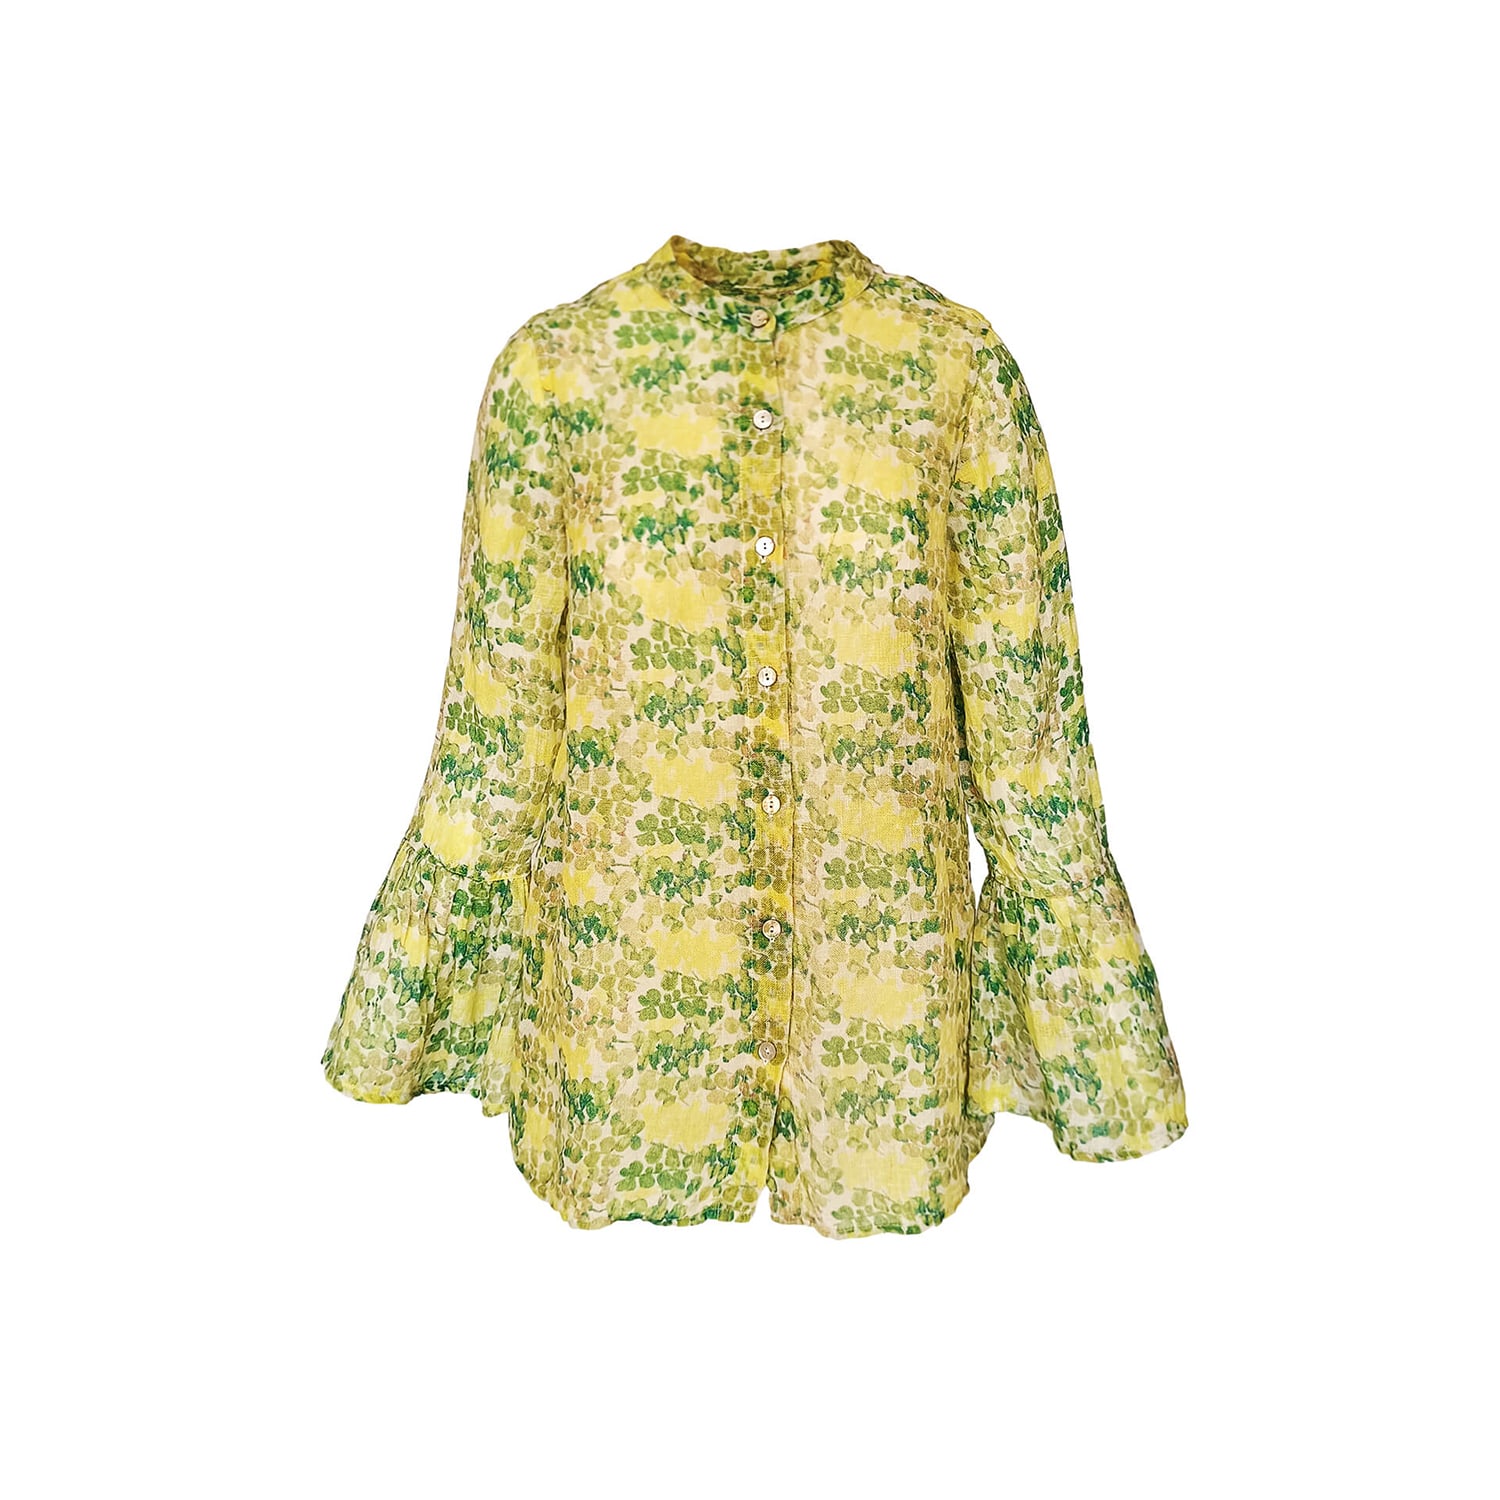 Haris Cotton Women's Printed Linen Gauze Shirt With Long Ruffled Sleeves - Petals Green